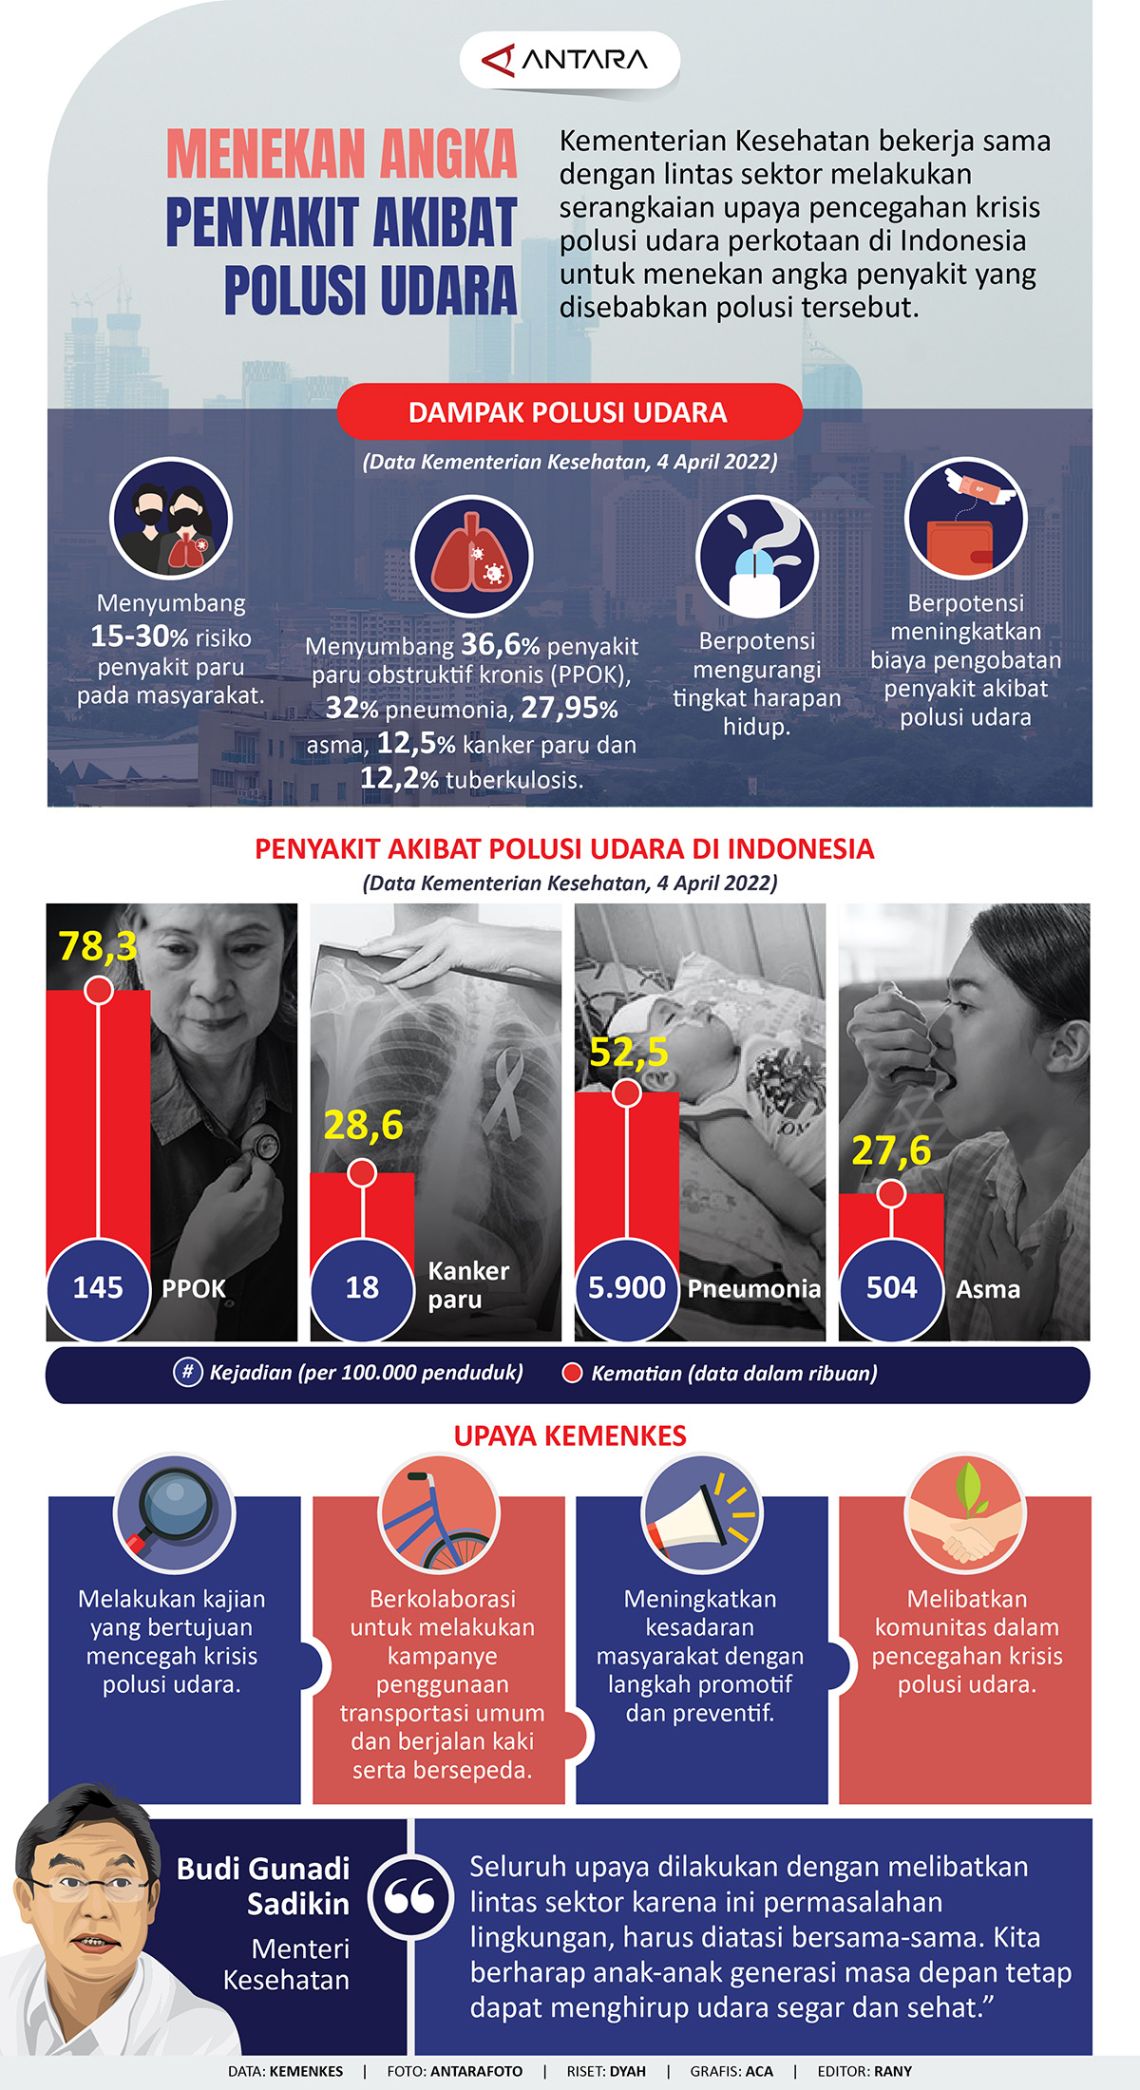 Menekan angka penyakit akibat polusi udara - Infografik ANTARA News